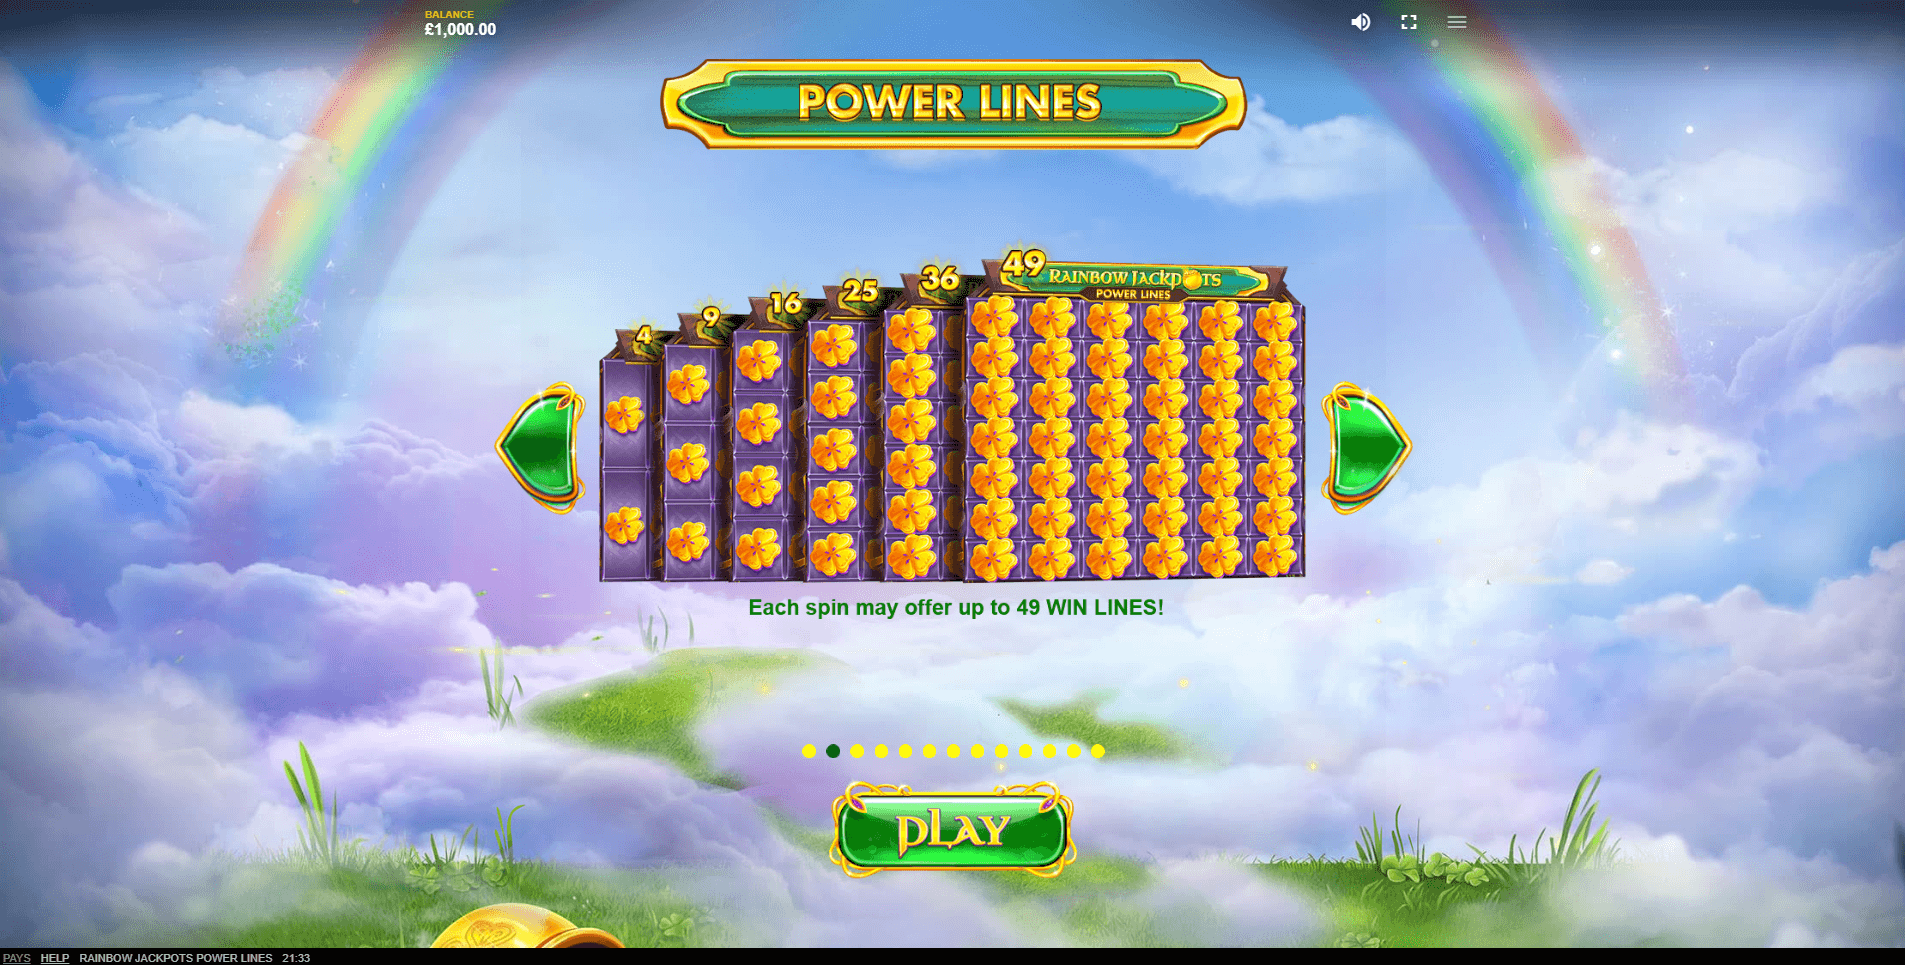 rainbow jackpots power lines slot machine detail image 4